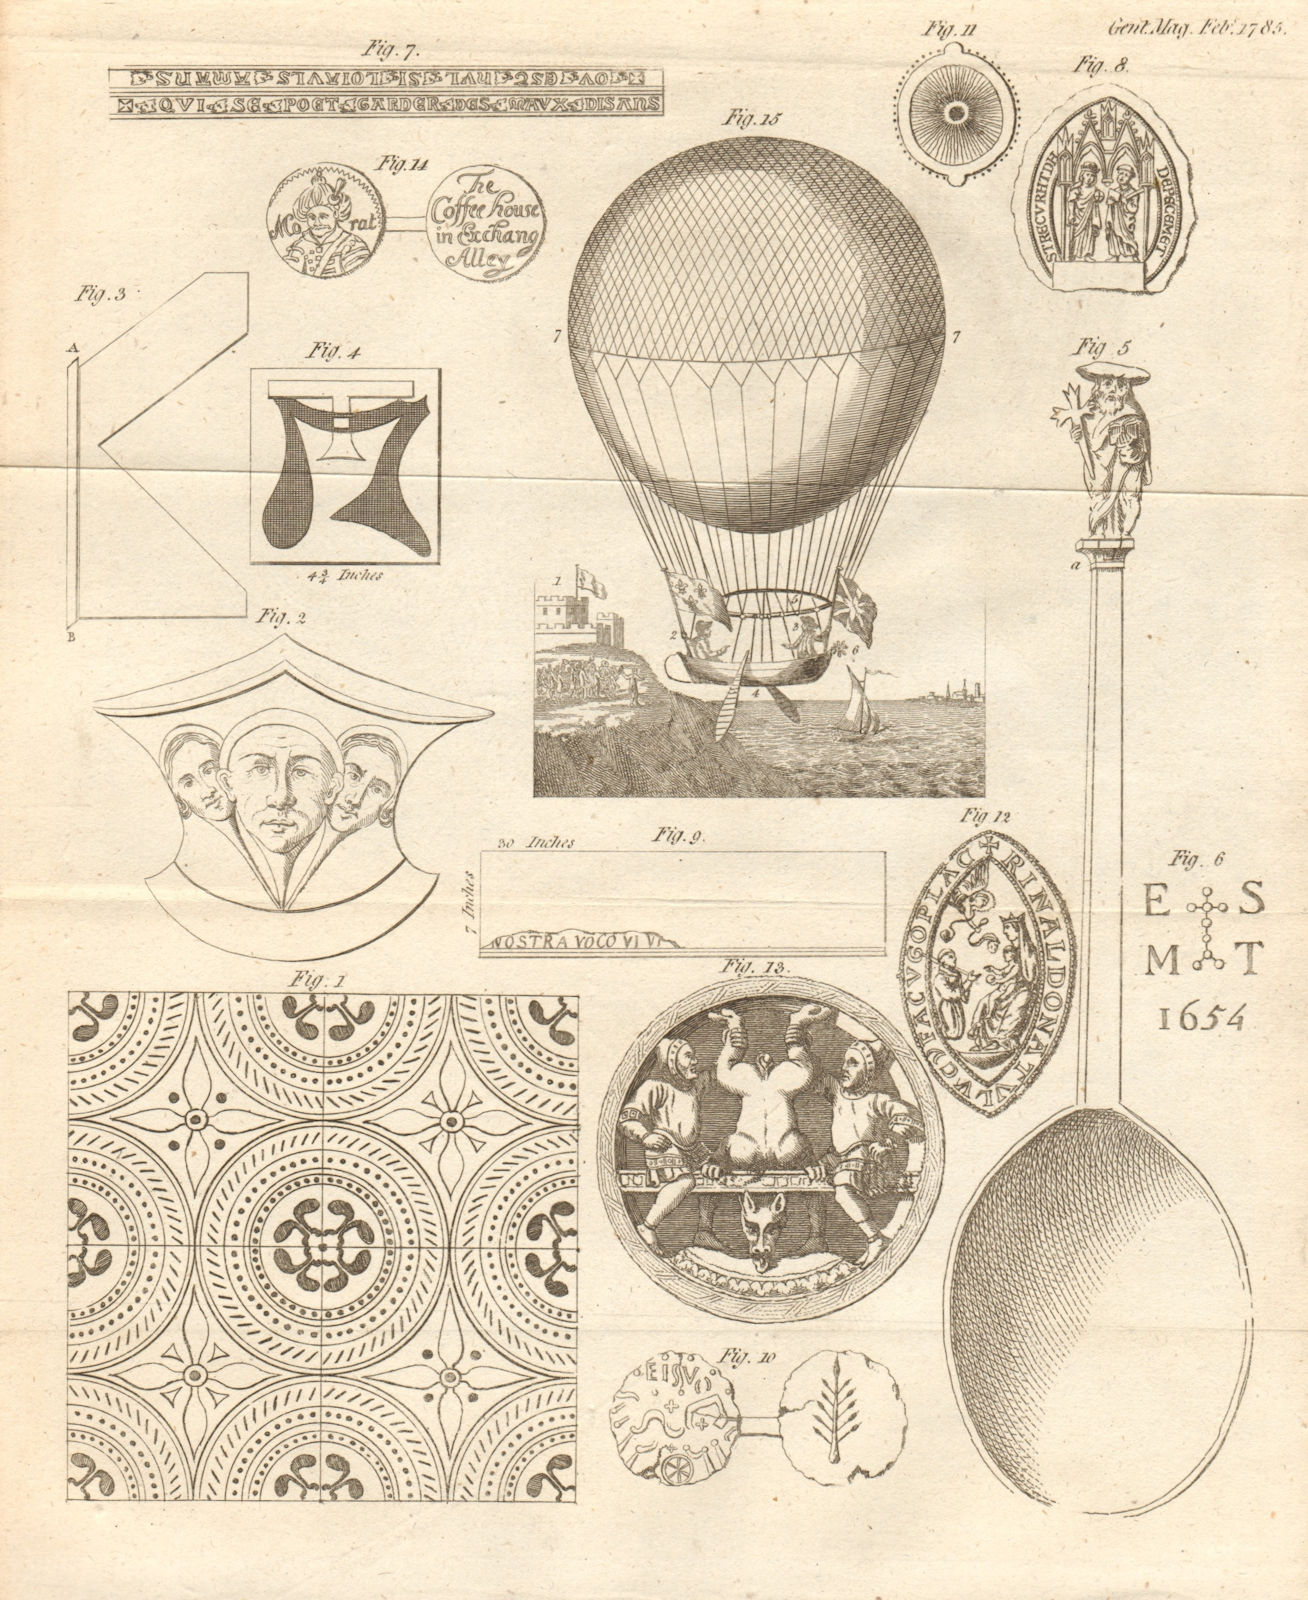 Tesscroe Whiteladies. Rodely. Blanchard's Balloon flight Dover to Calais 1785